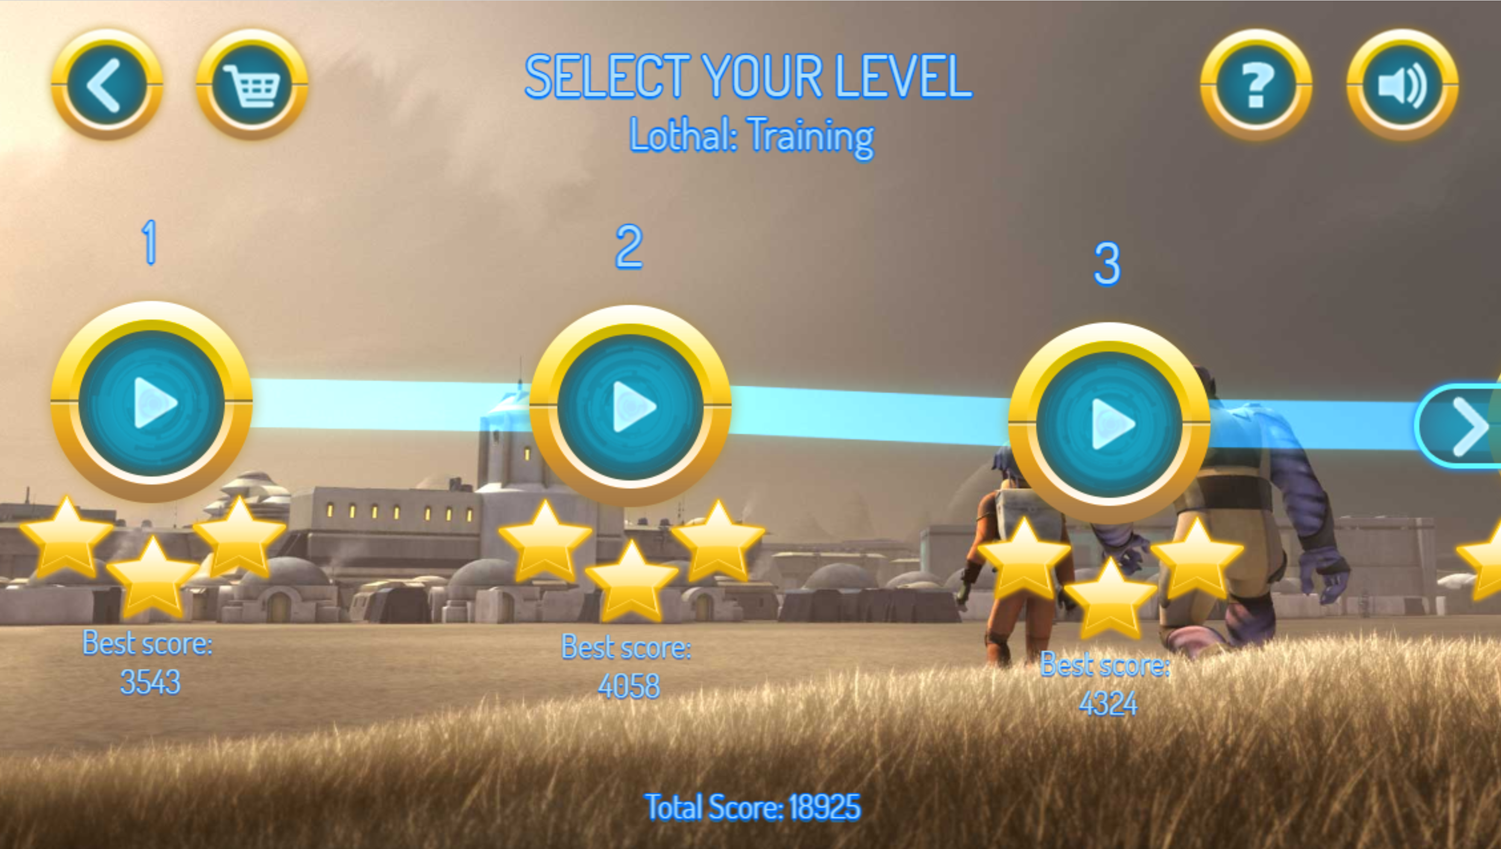 Star Wars Rebels Team Tactics Level Select Screenshot.